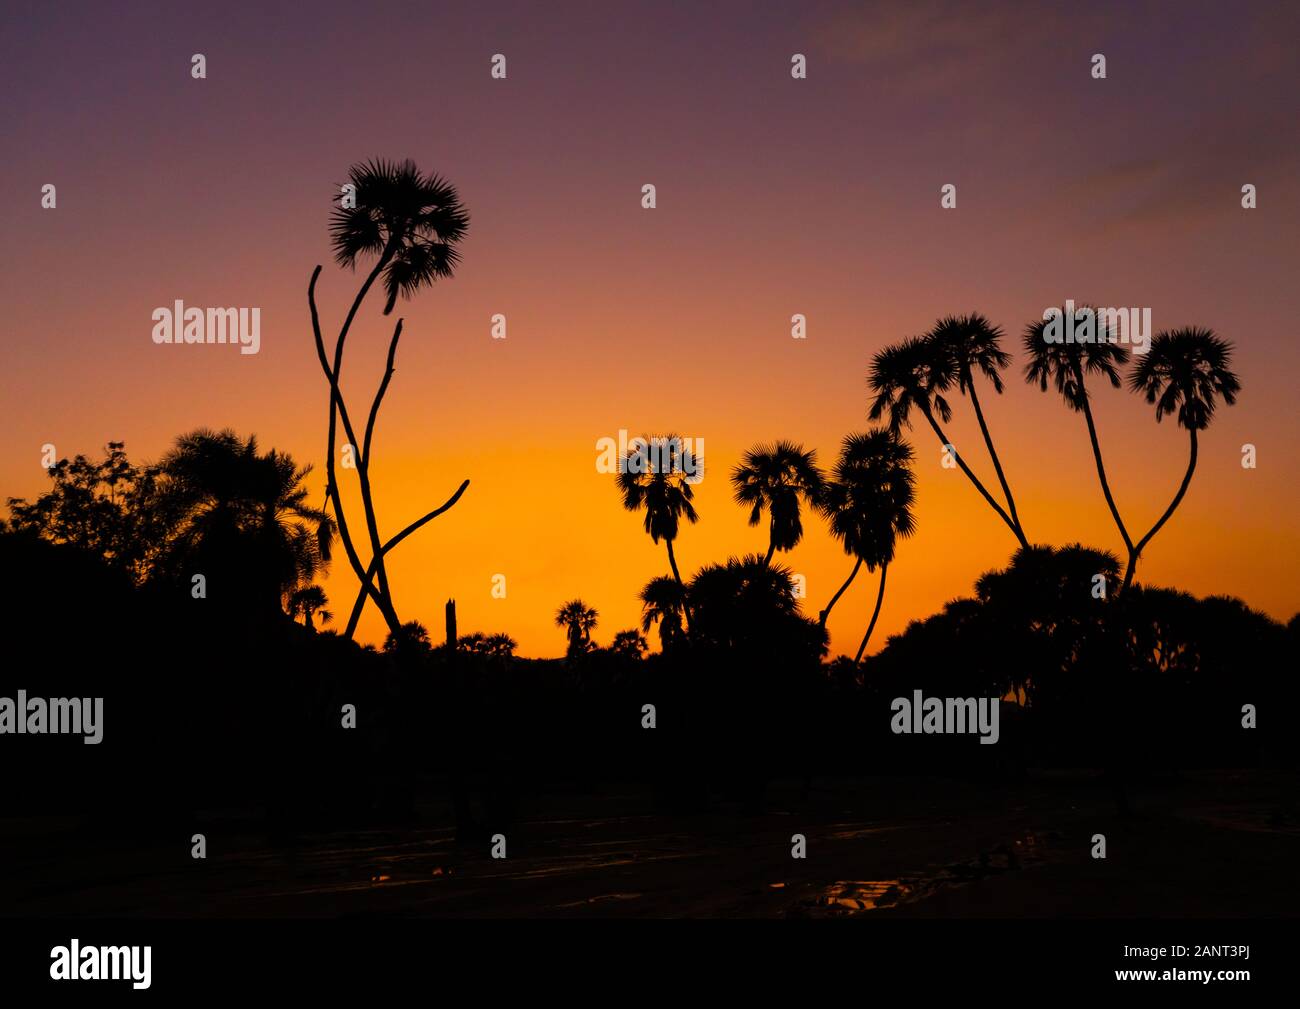 Plam trees in the sunset, Jizan province, Alaydabi, Saudi Arabia Stock Photo